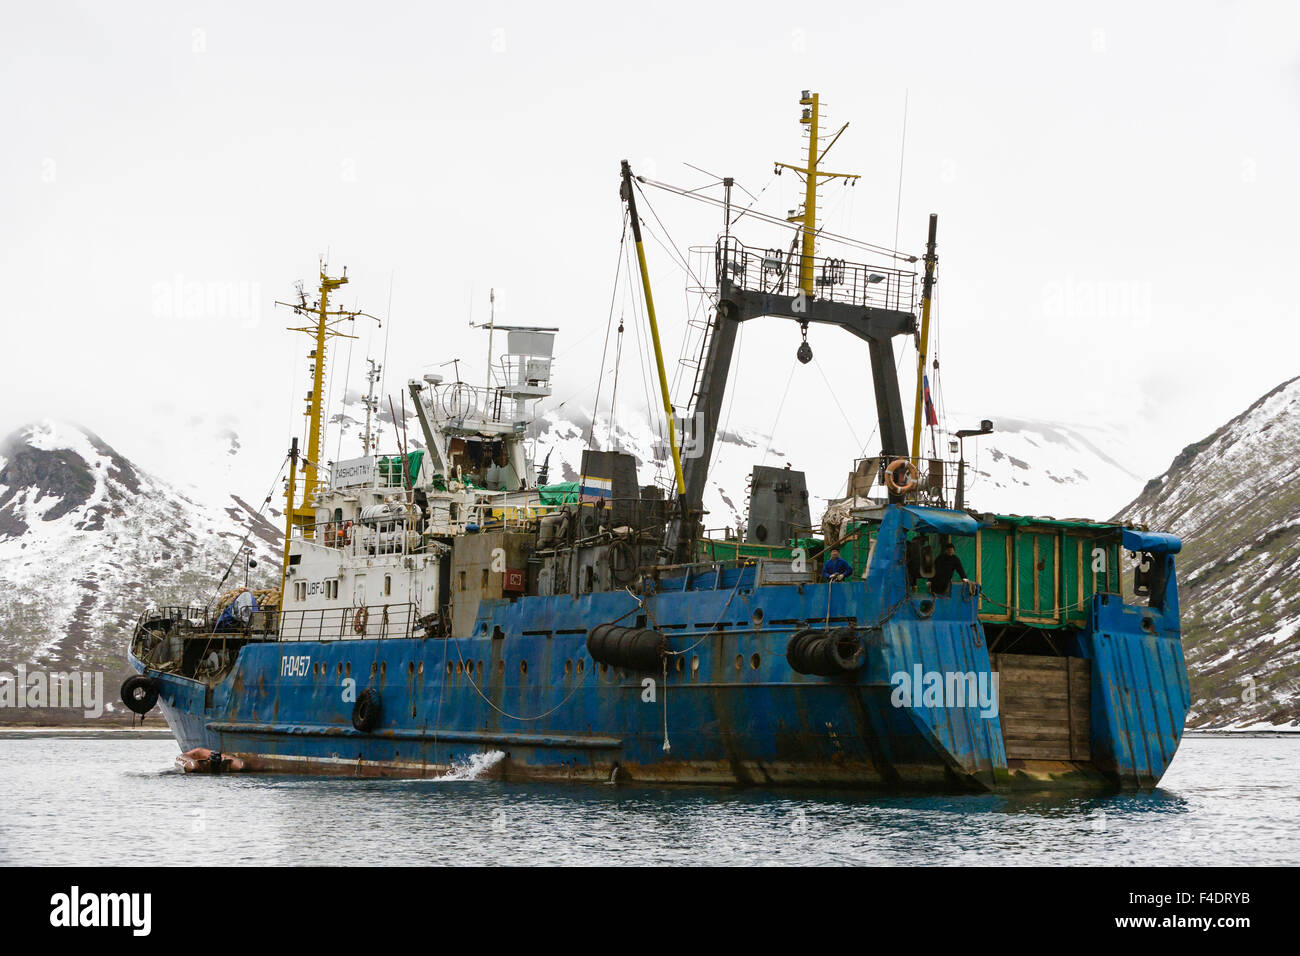 Russia, Kamchatka, Lavrova Bay, Purse seiner fishing boat on bay Stock Photo